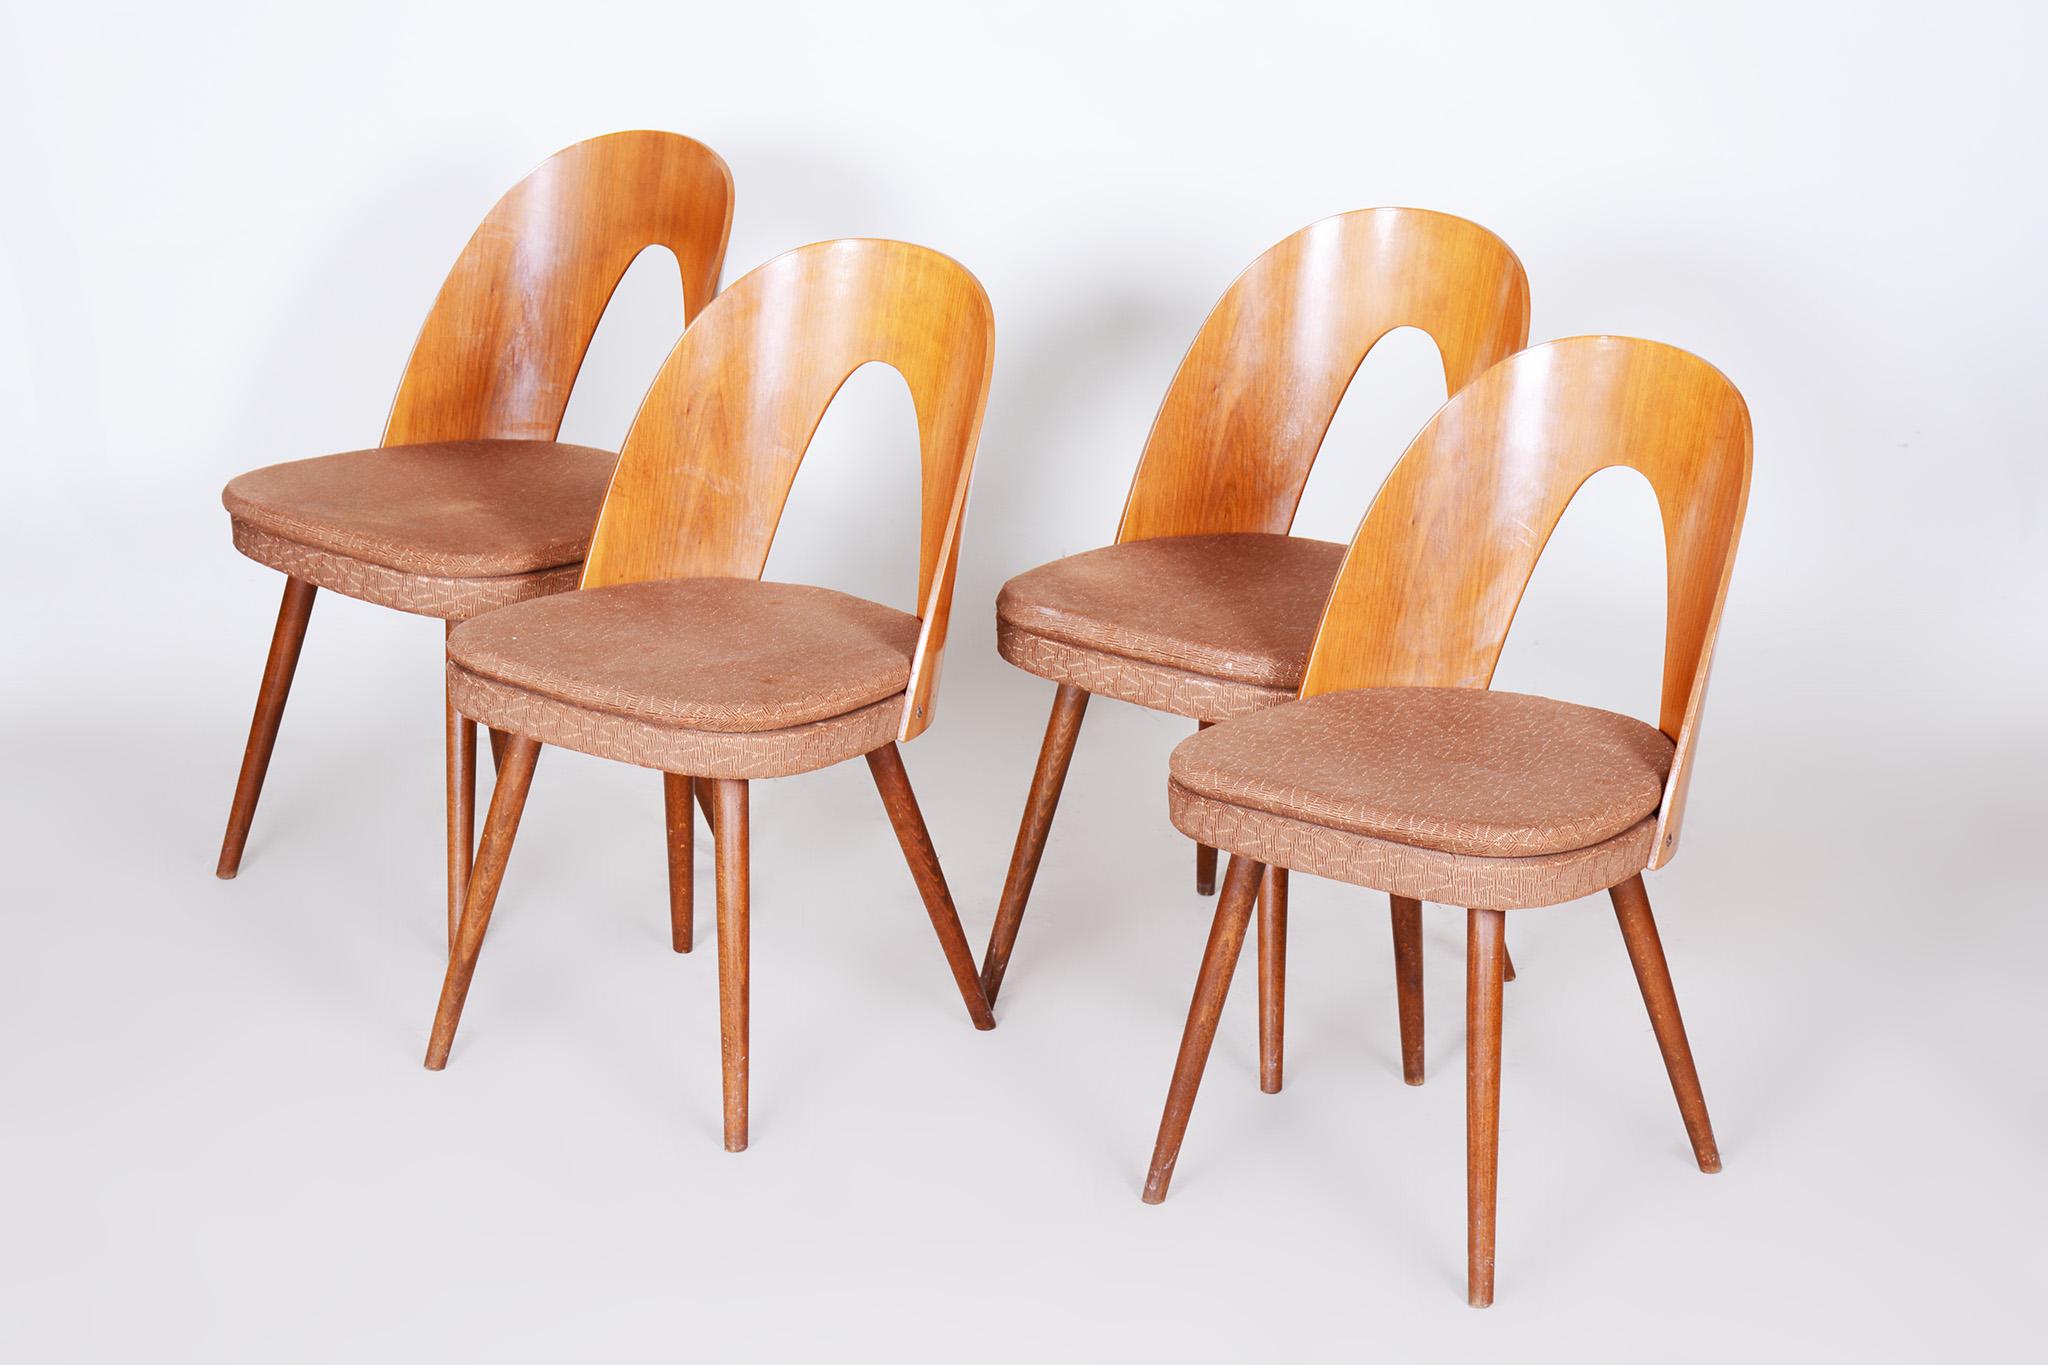 Set of Four Mid-Century Modern Chairs Made in 1950s Czechia by Antonín Šuman For Sale 2